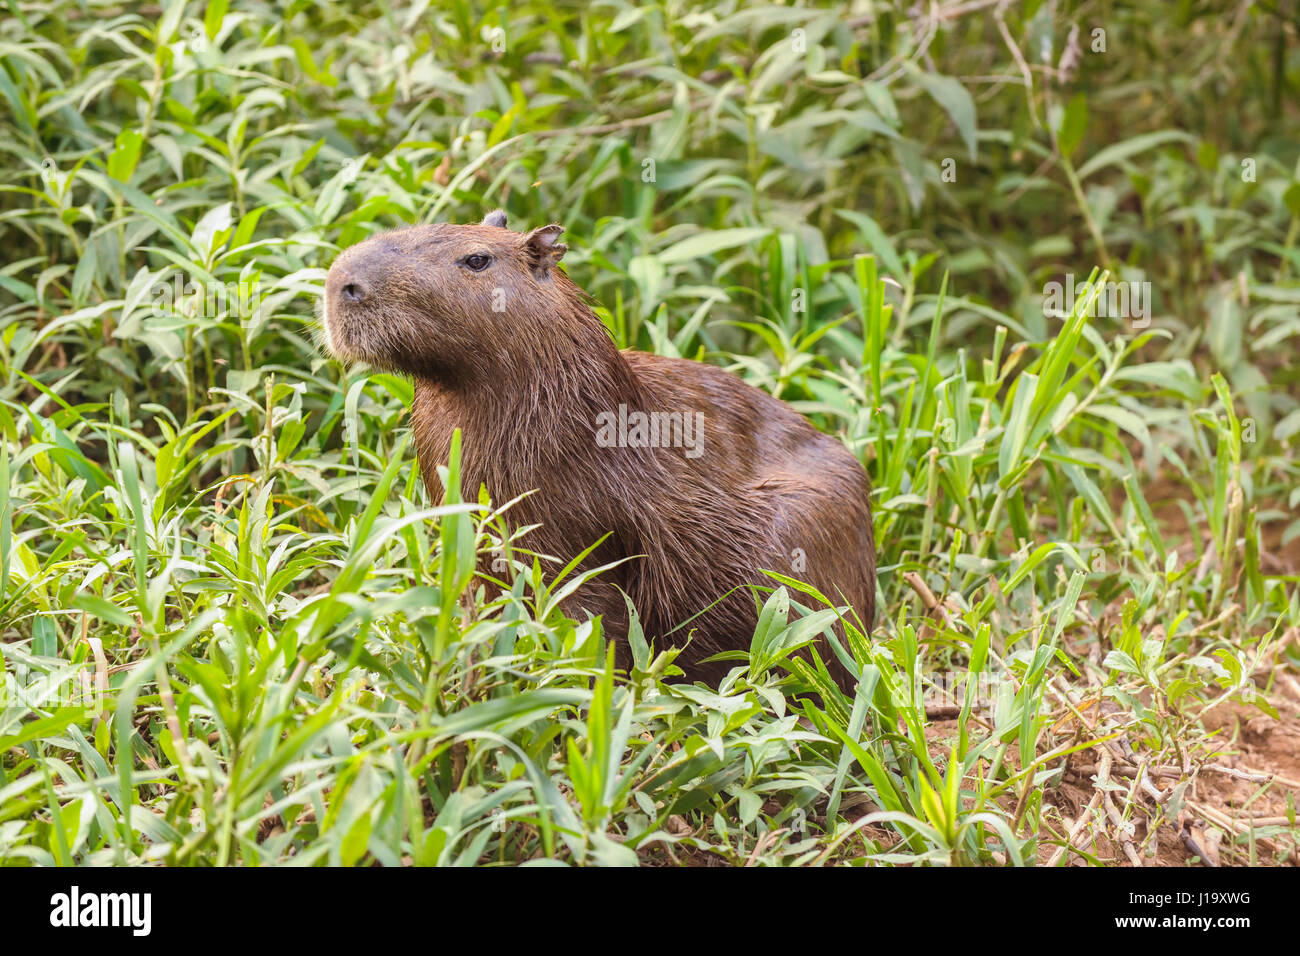 An adult capybara (Hydrochoerus hydrochaeris) sitting on a river bank in the Pantanal region of Brazil Stock Photo